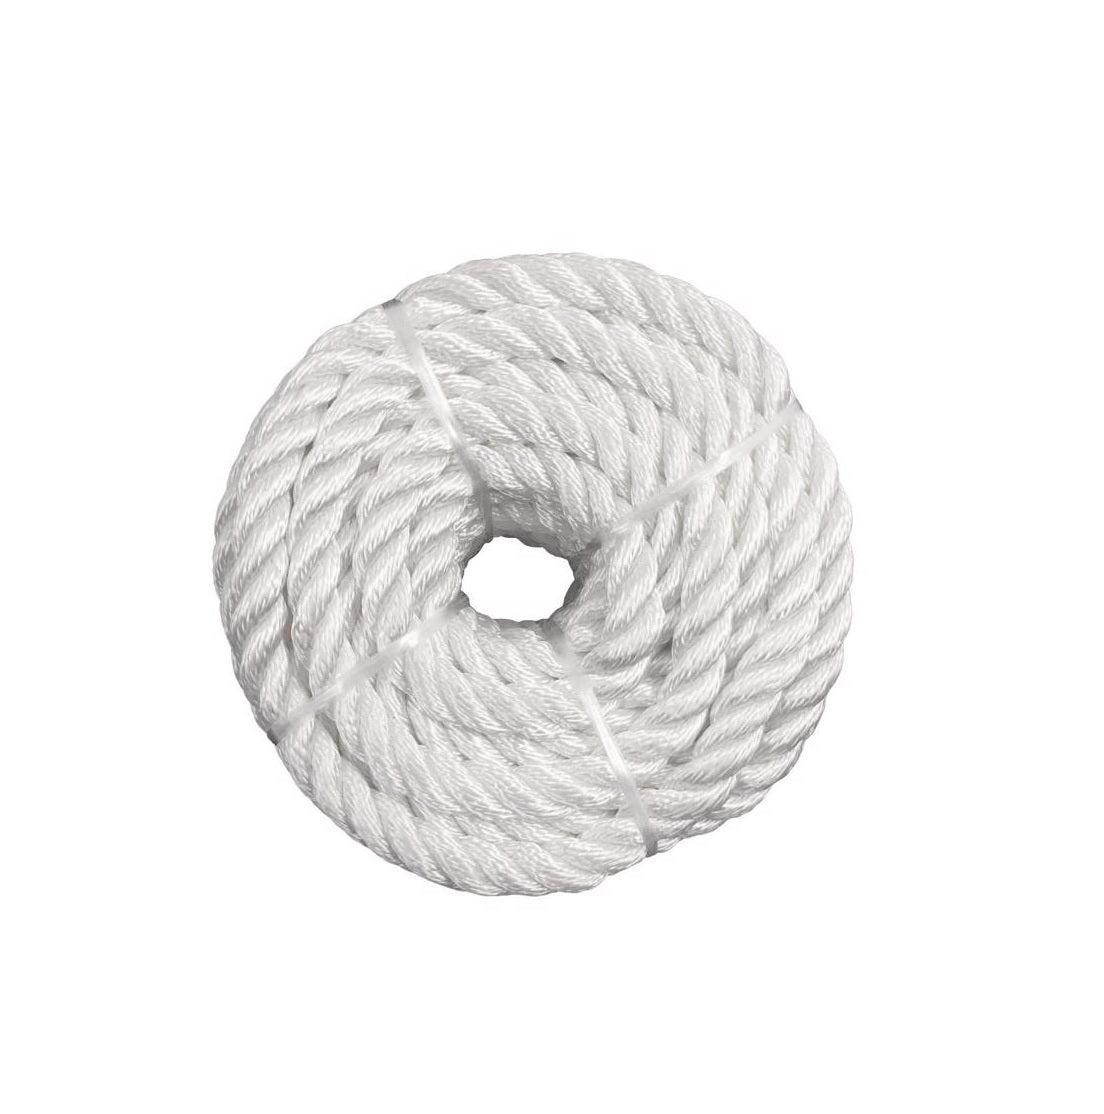 Koch 5211235 Twisted Rope, Nylon, 50 Feet